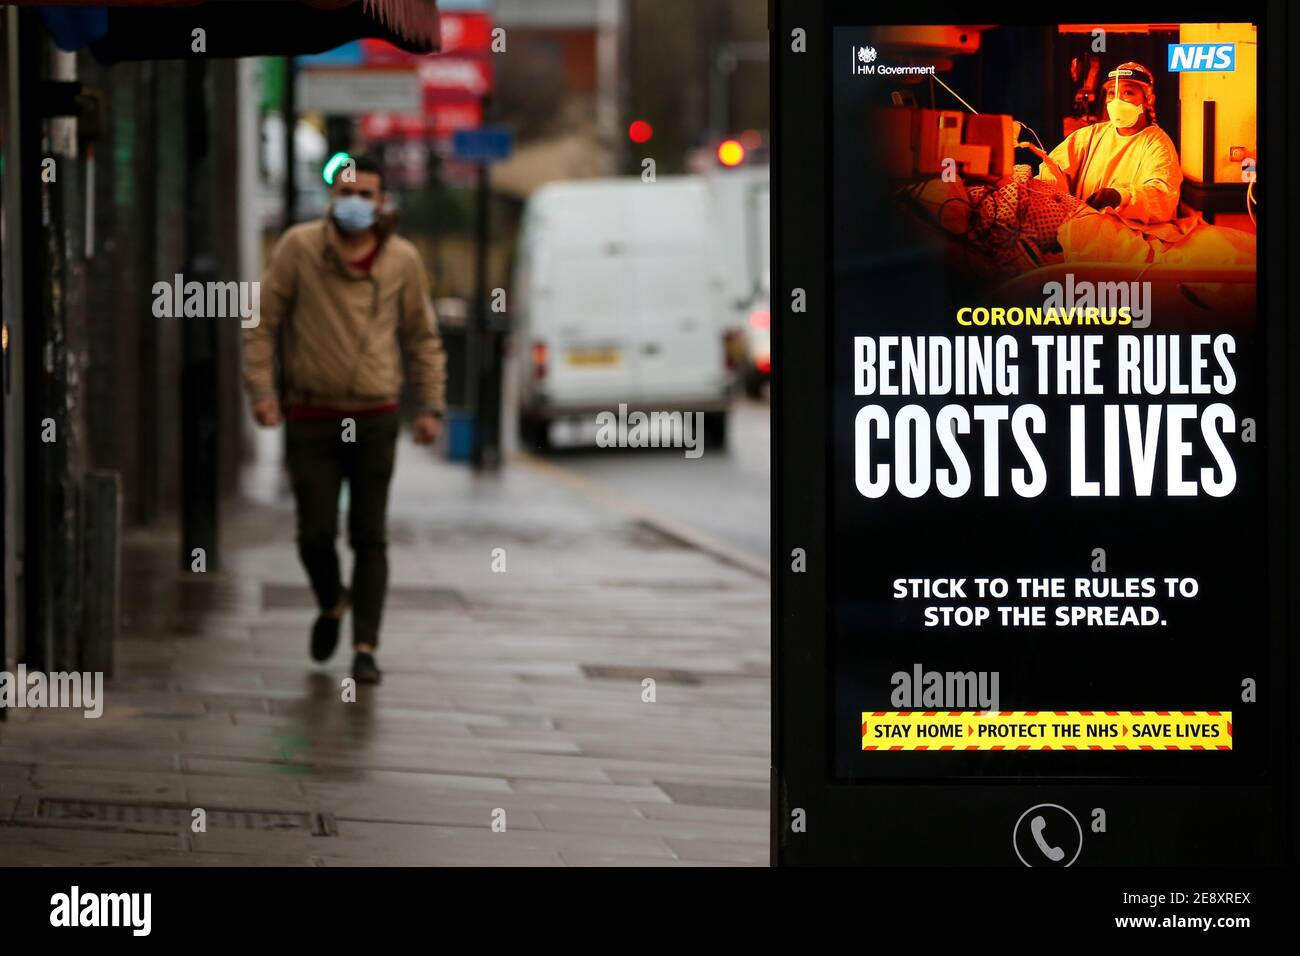 El anuncio de la campaña de coronavirus "Bending the Rules costs Lives" en Londres. Foto de stock